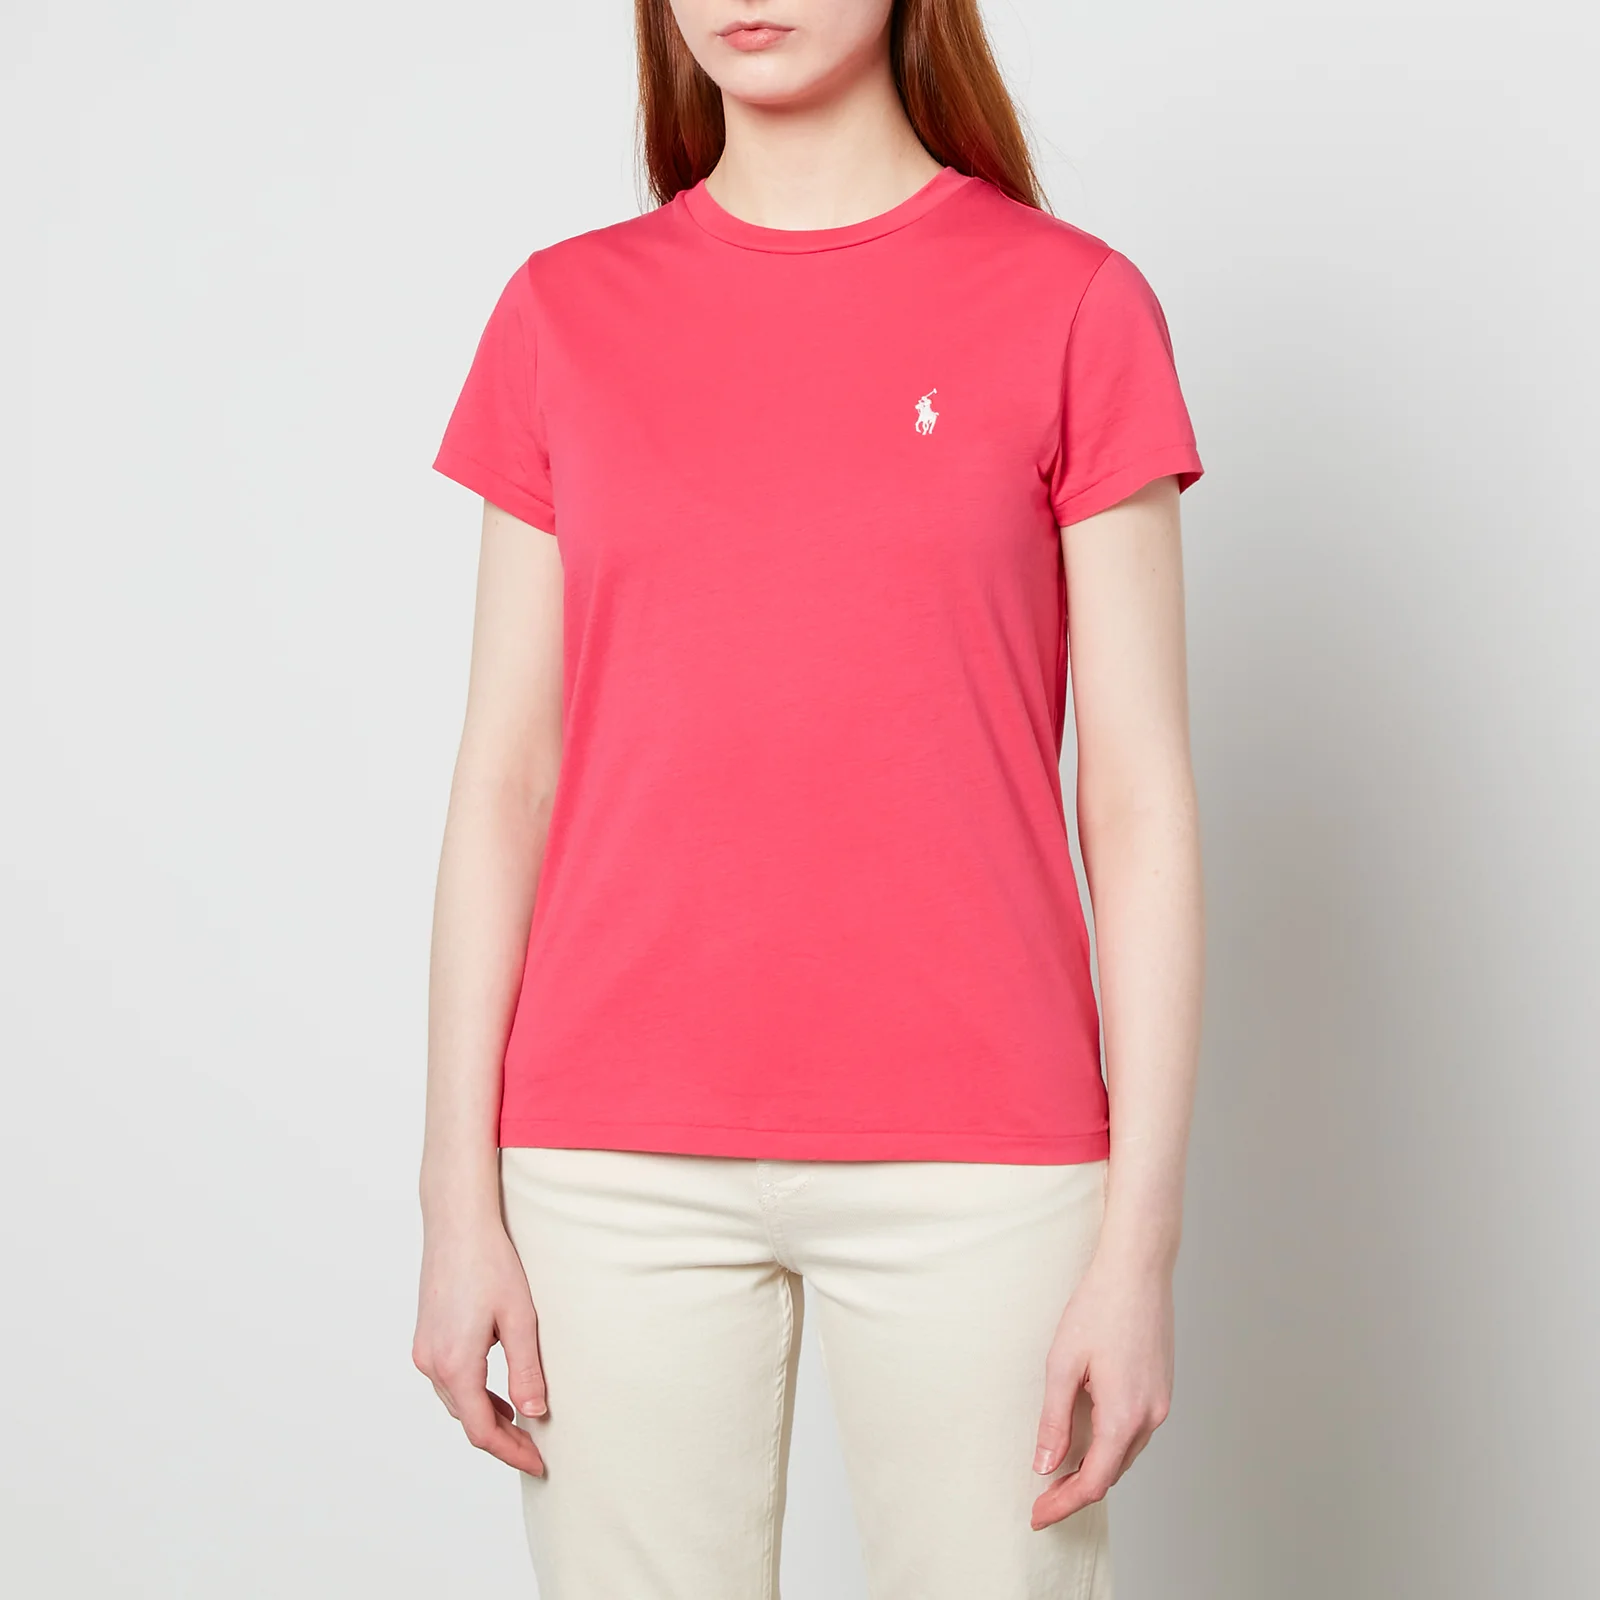 Polo Ralph Lauren Women's Mini Logo T-Shirt - Hot Pink Image 1